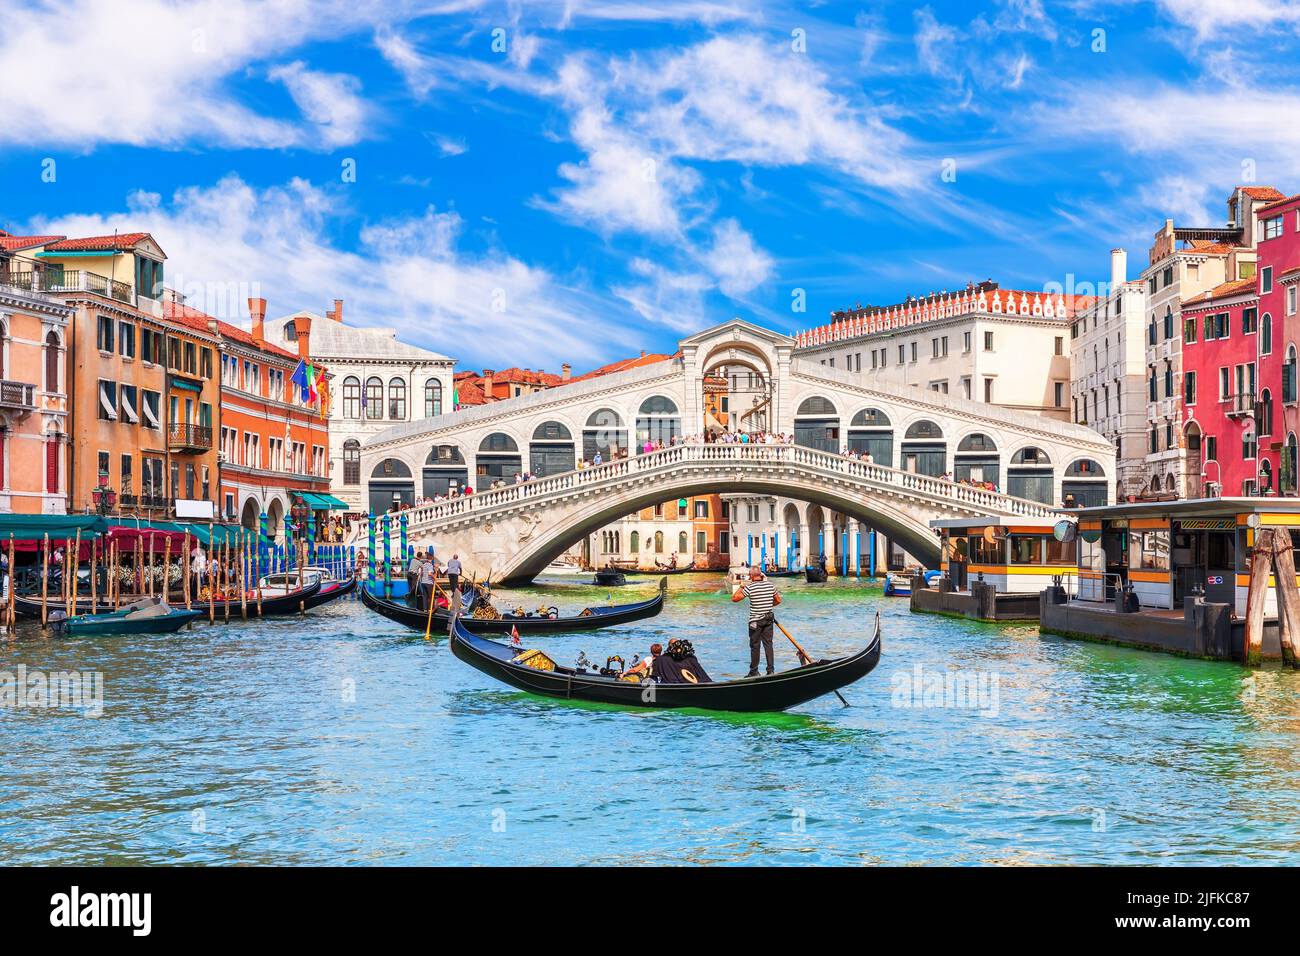 Gandolas in the lagoon of Venice, beautiful tourist attraction, Italy. Stock Photo